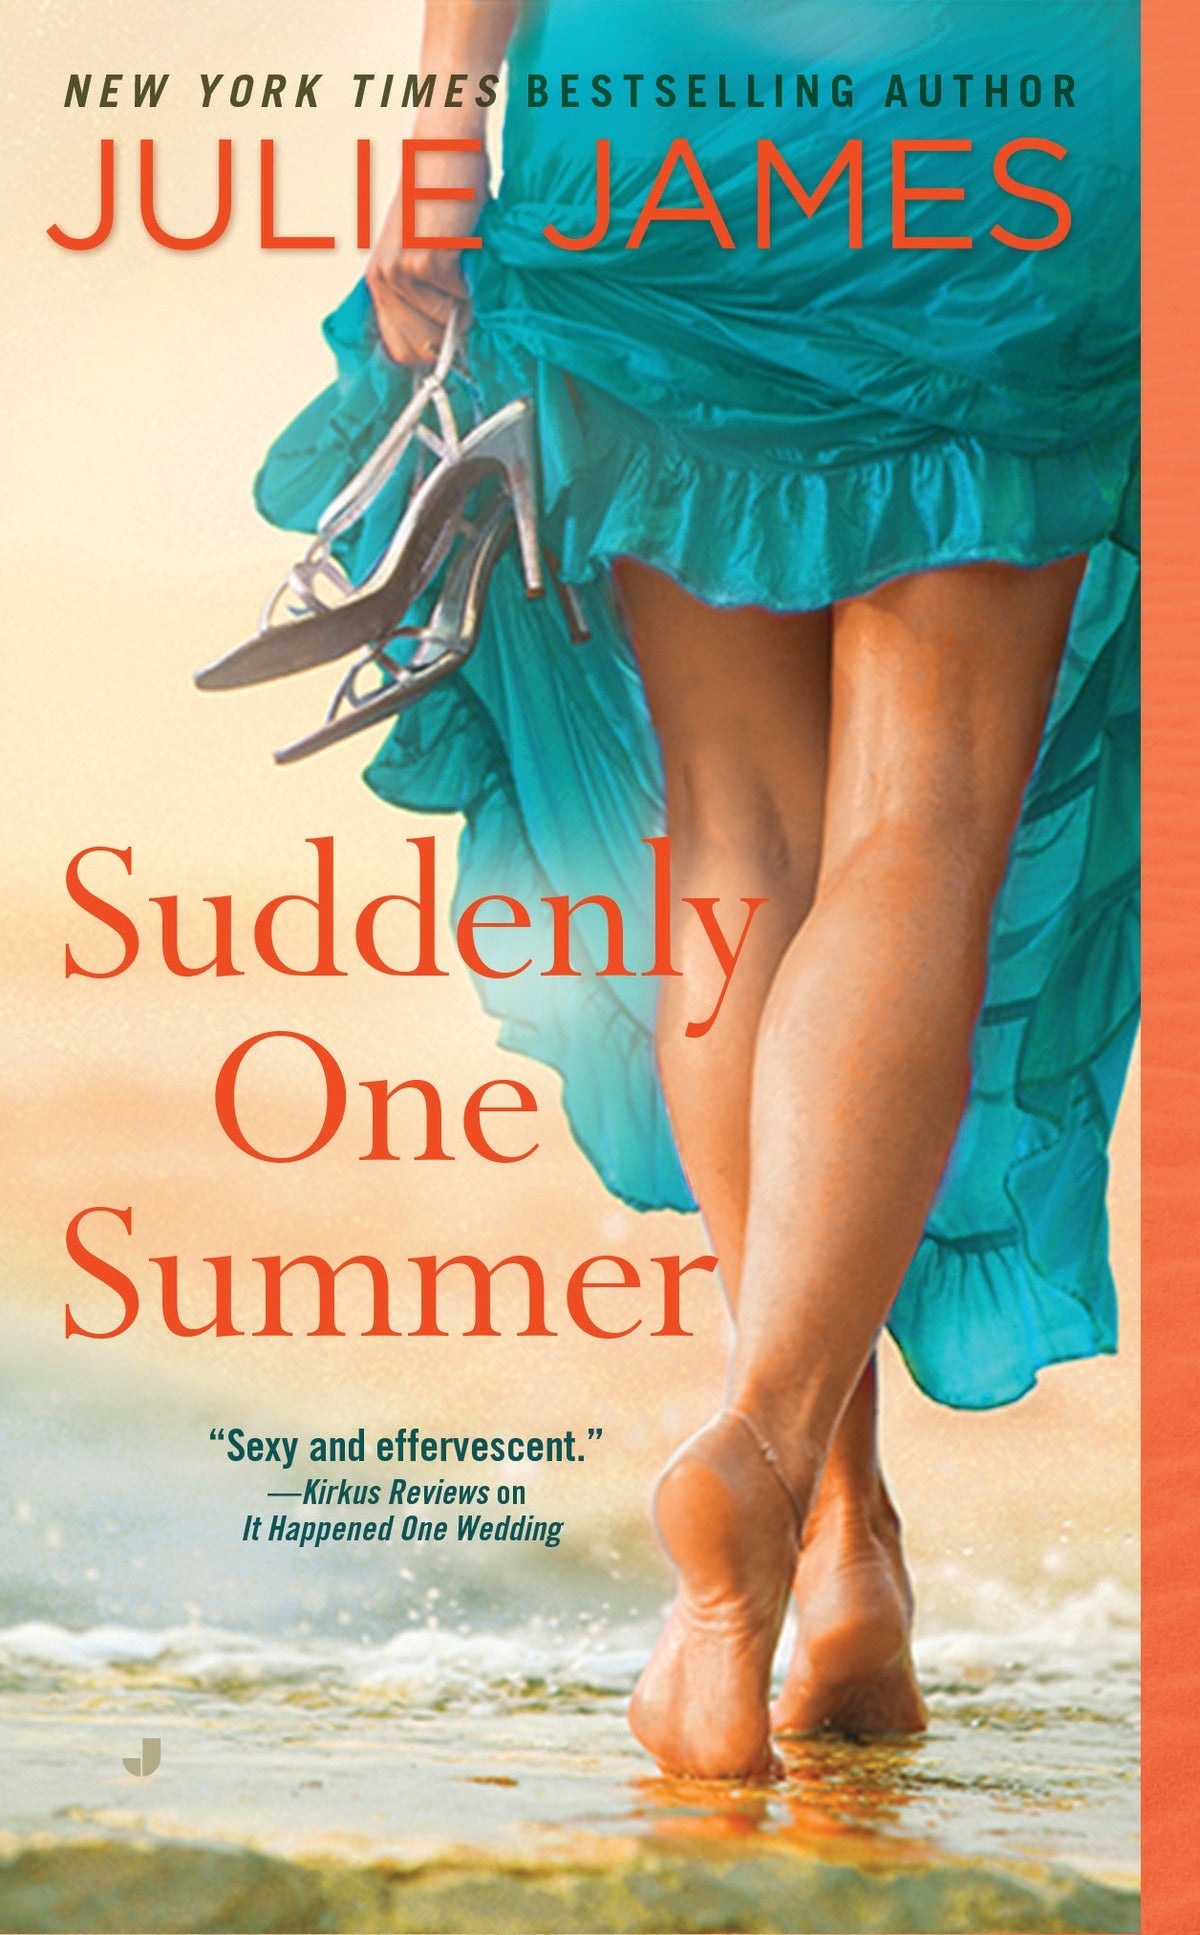 Suddenly One Summer (FBI/US Attorney Novel)